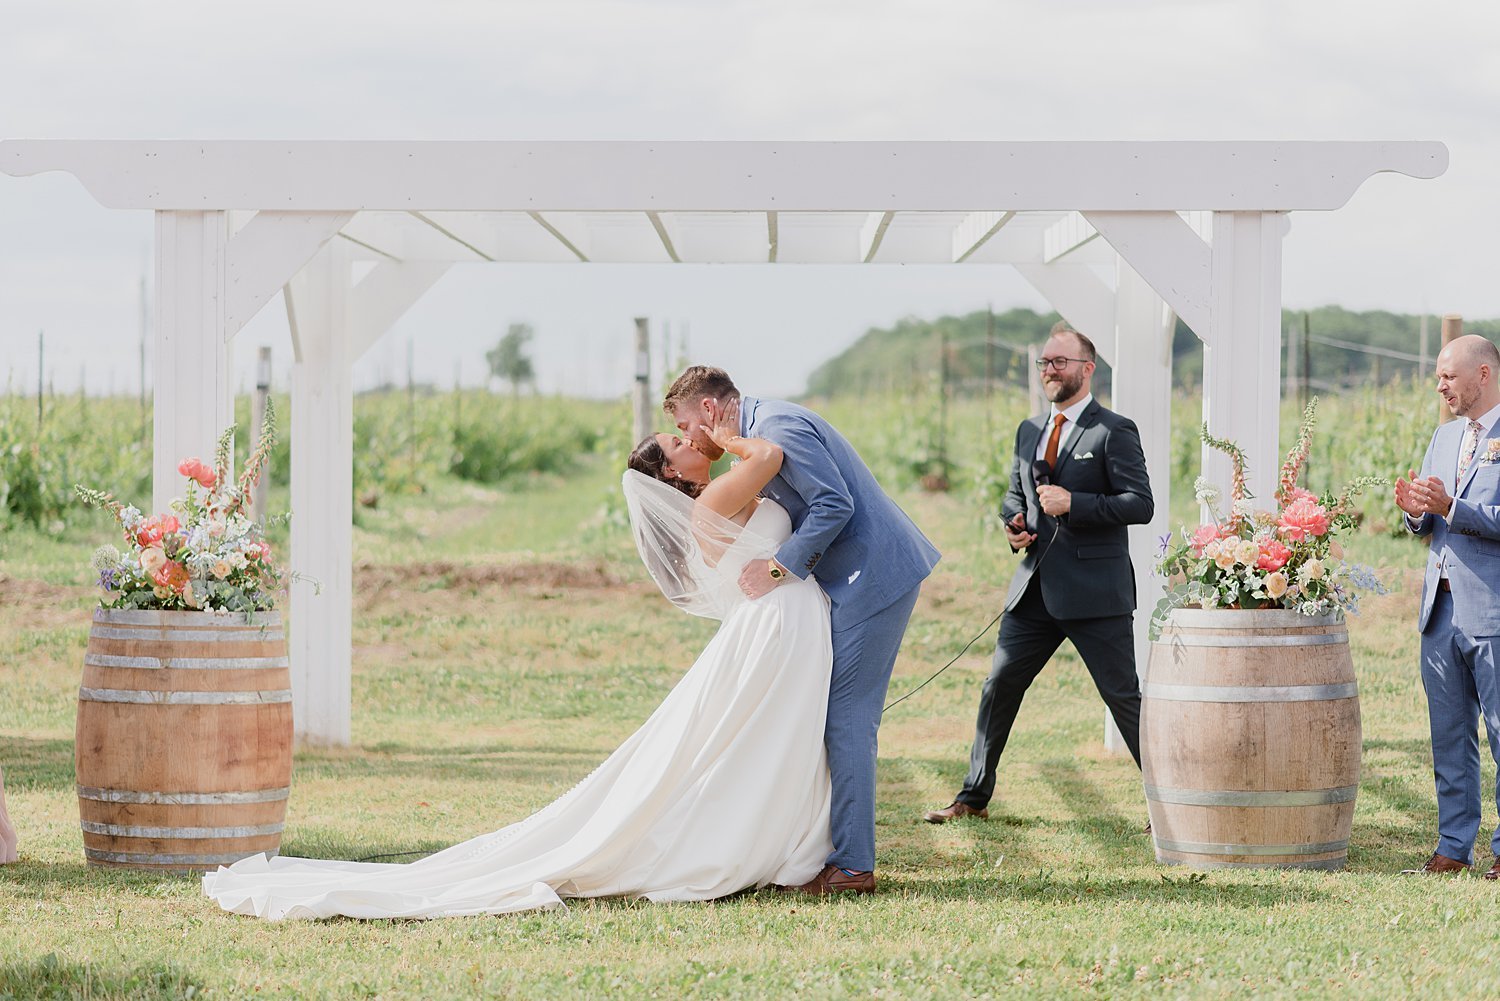 Casa Dea Winery Wedding in Prince Edward County | Prince Edward County Wedding Photographer | Holly McMurter Photographs_0086.jpg